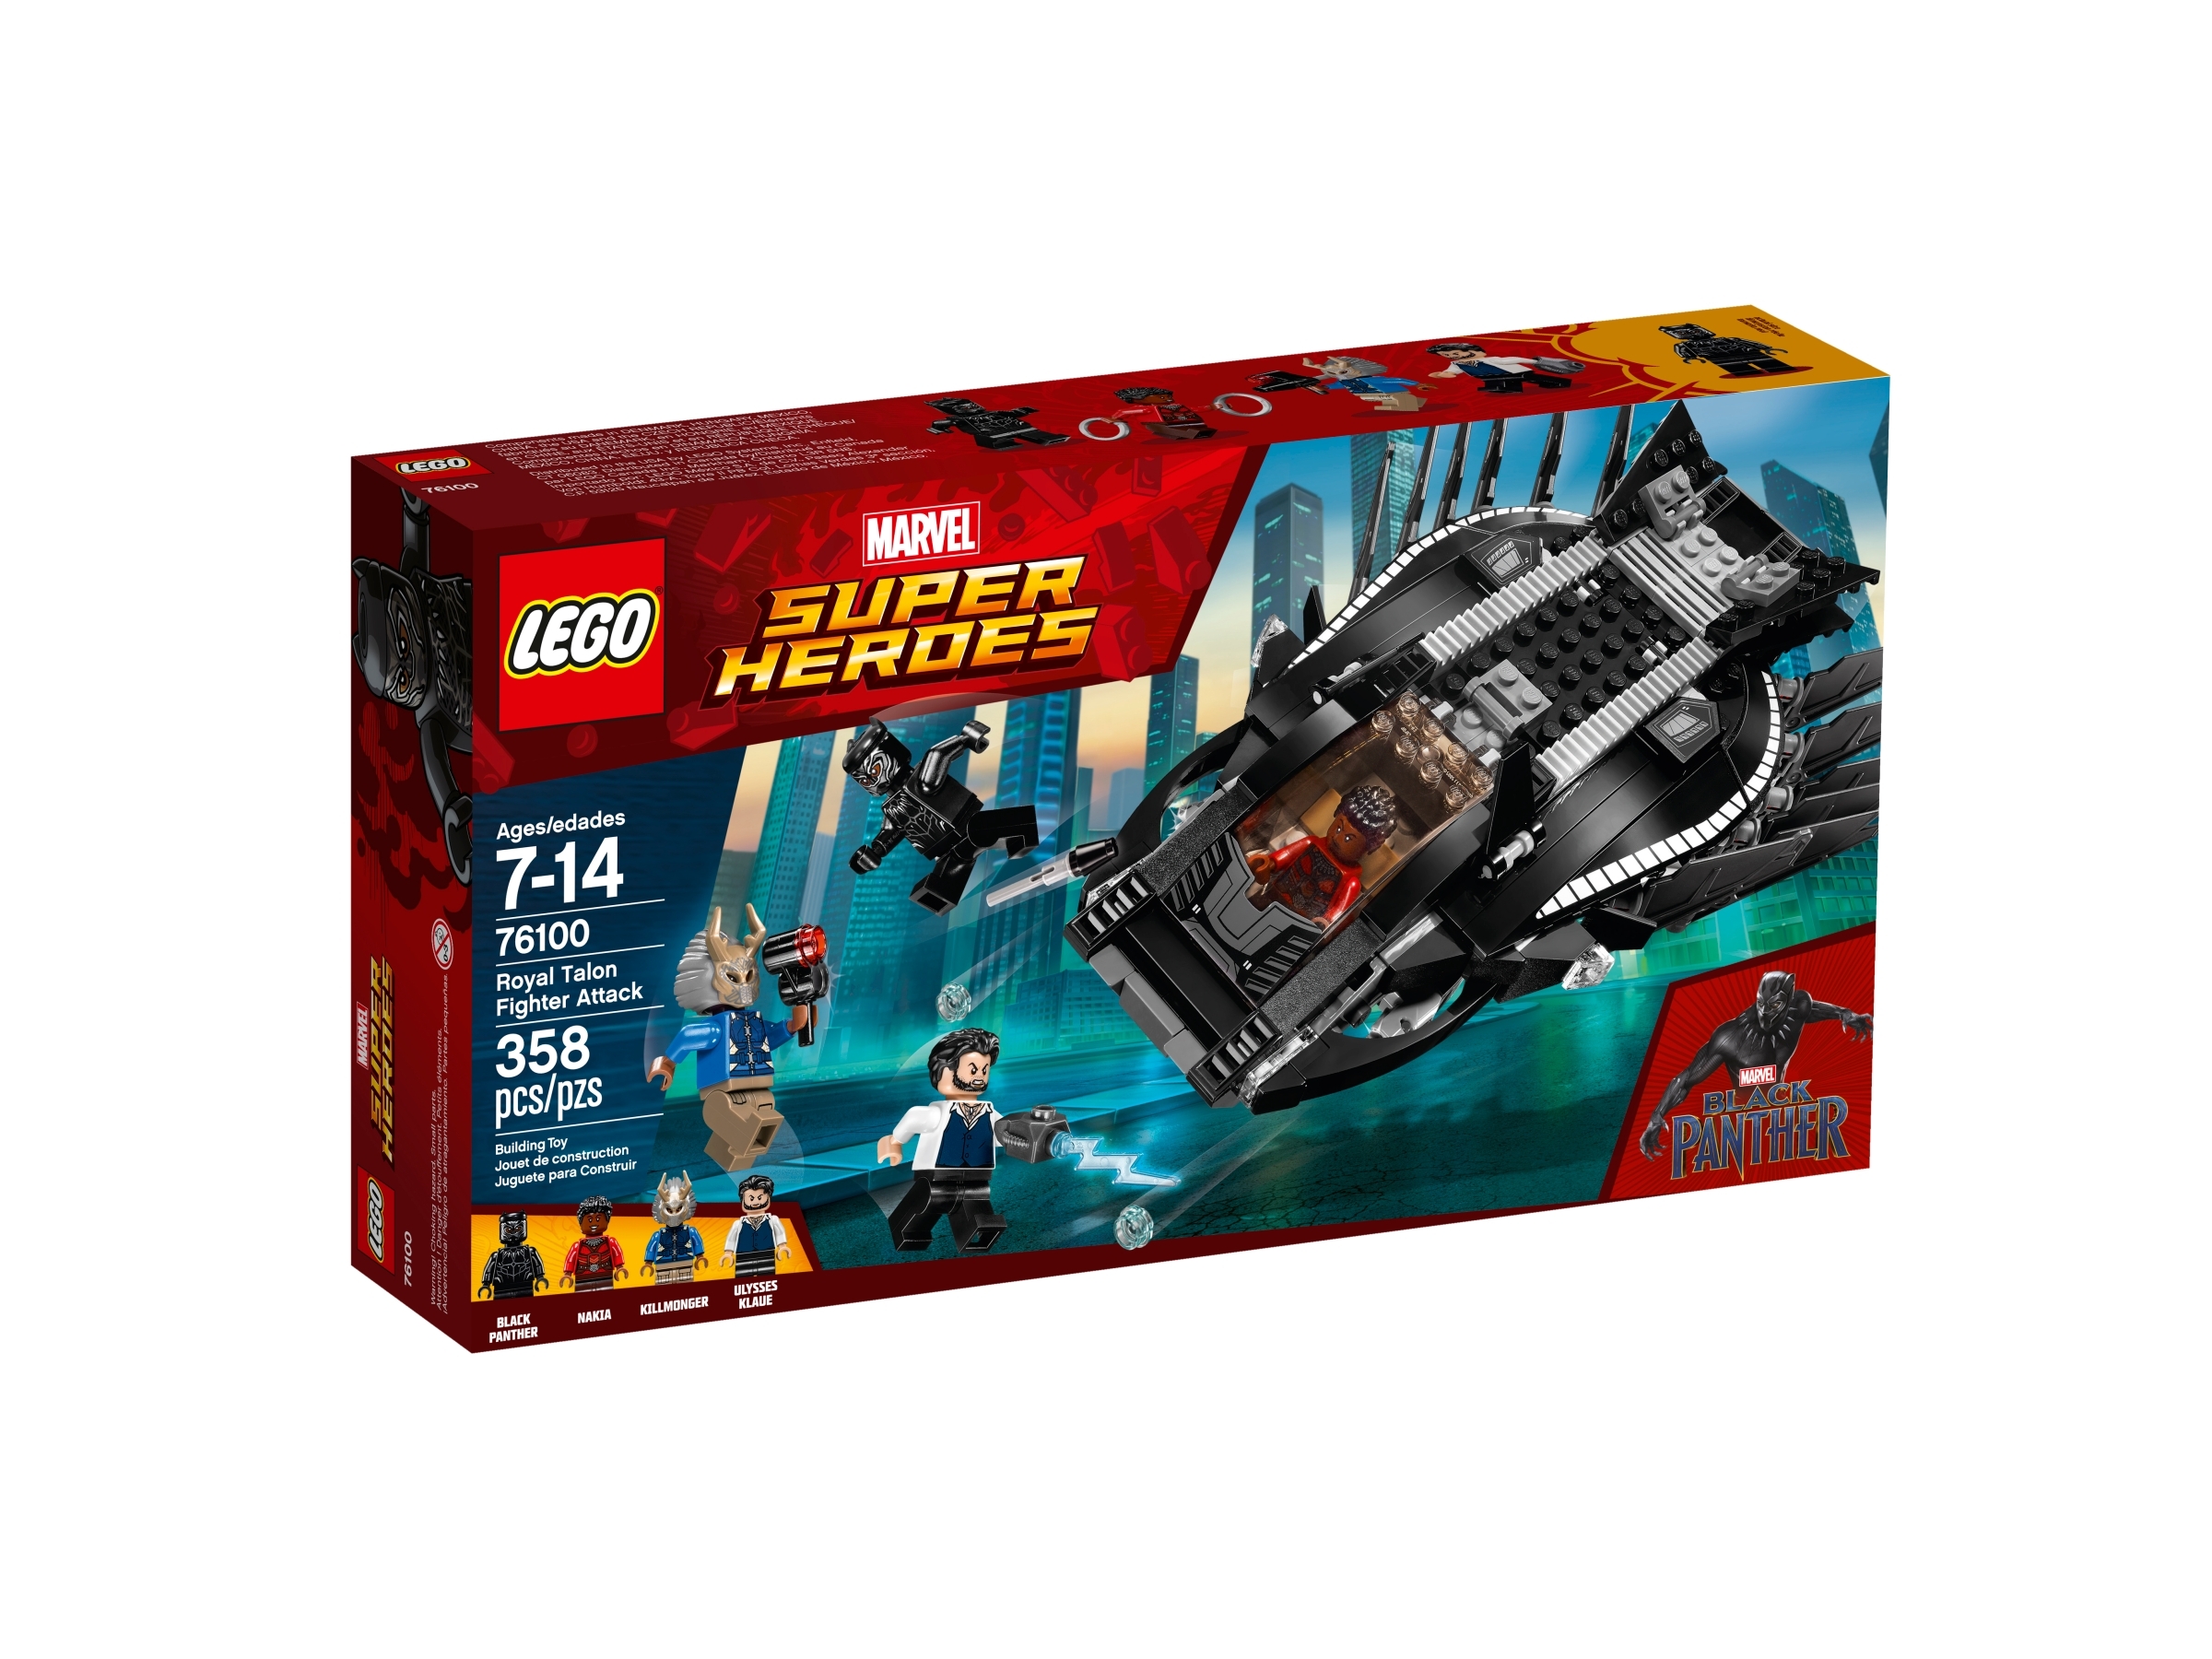 76100 LEGO Marvel Super Heroes Black Panther Minifigure 